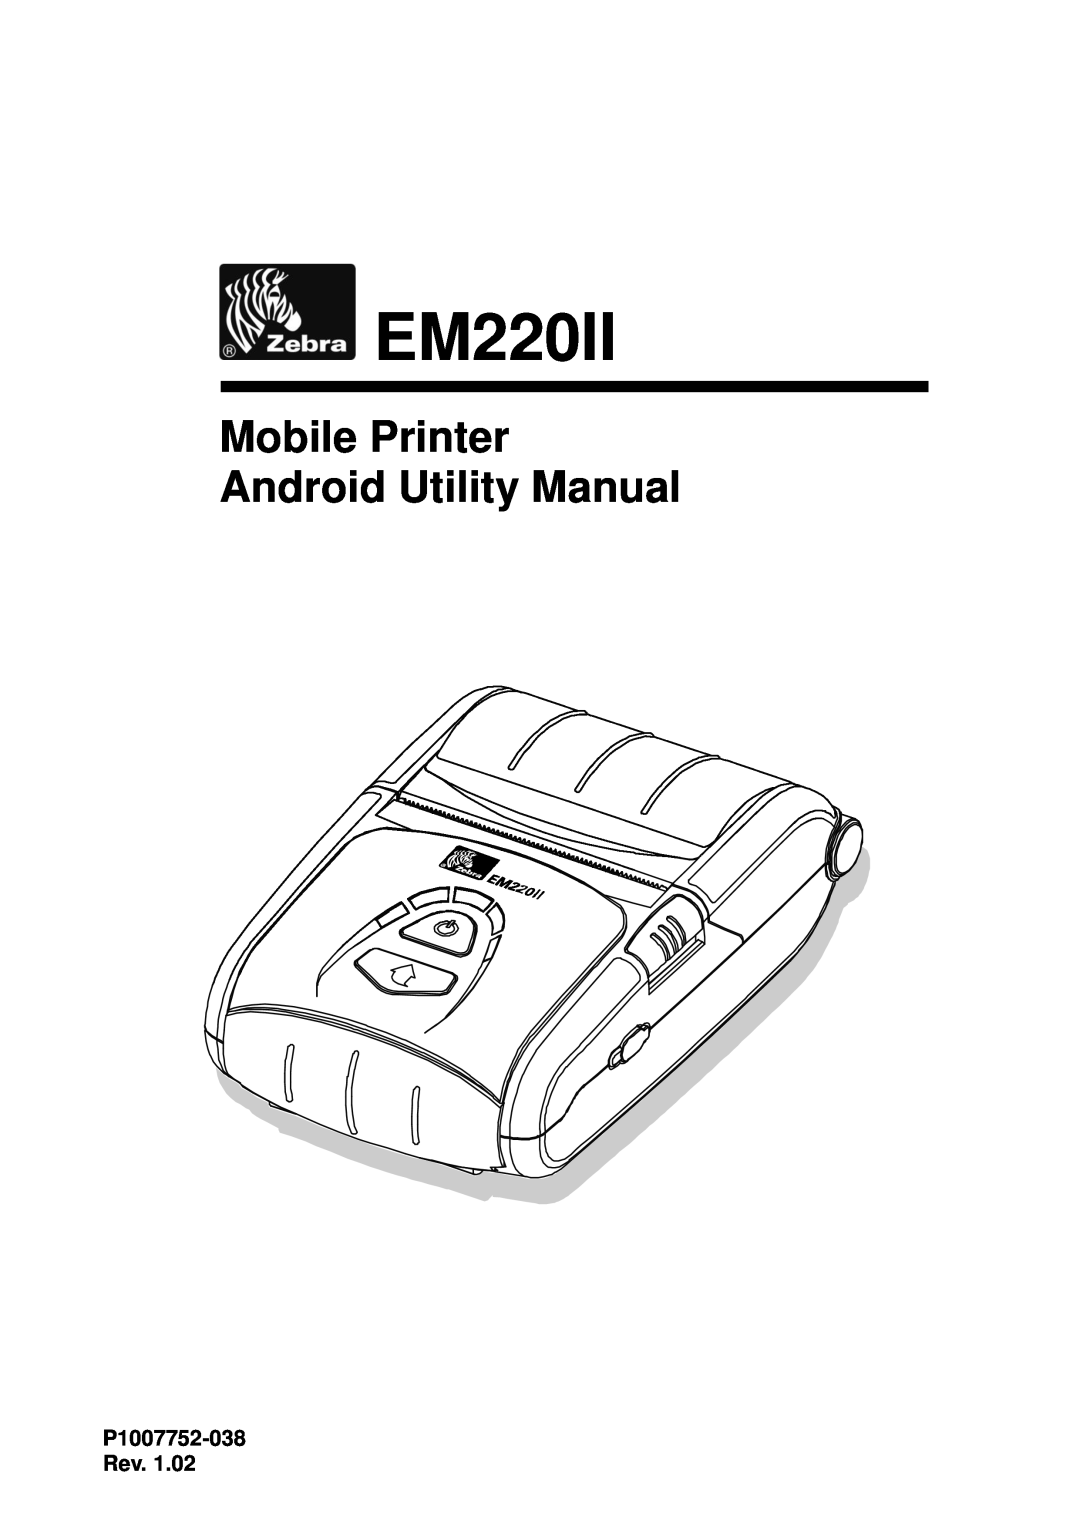 Zebra Technologies EM220II manual P1007752-038 Rev, Mobile Printer Android Utility Manual 